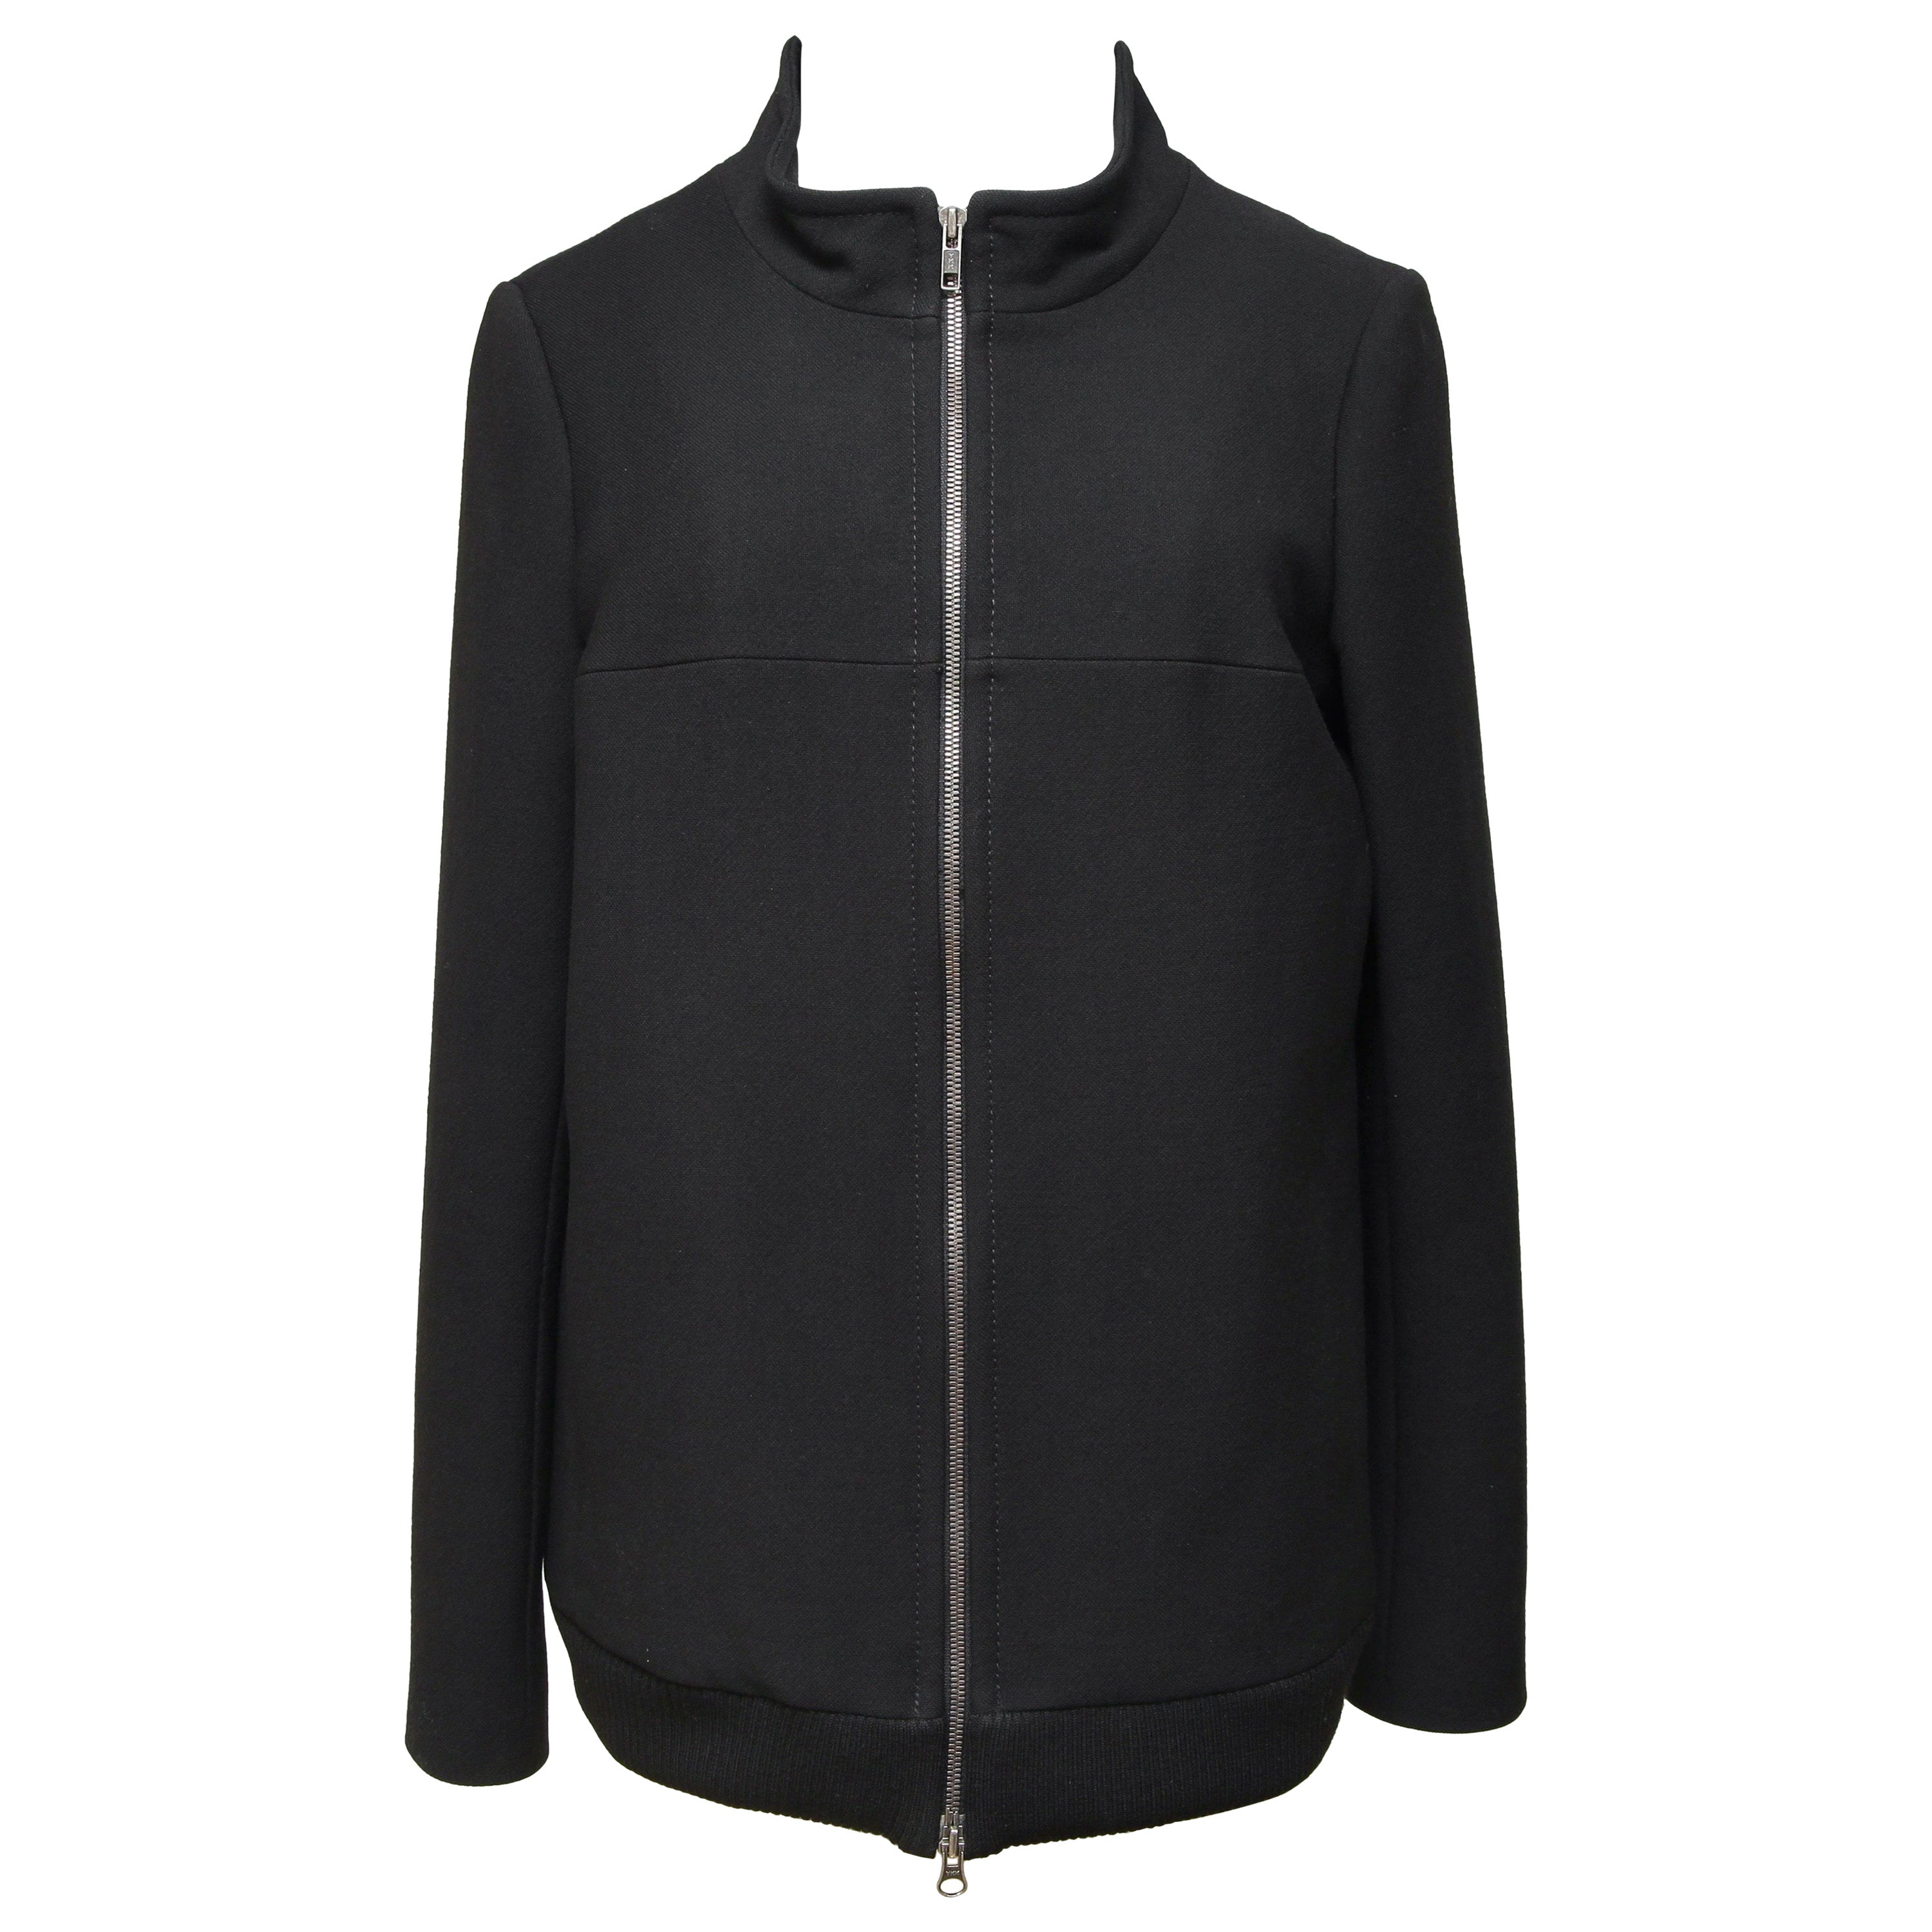 CHLOE Black Coat Jacket Long Sleeve Zipper Stand Up Collar Sz 36 2007 For Sale